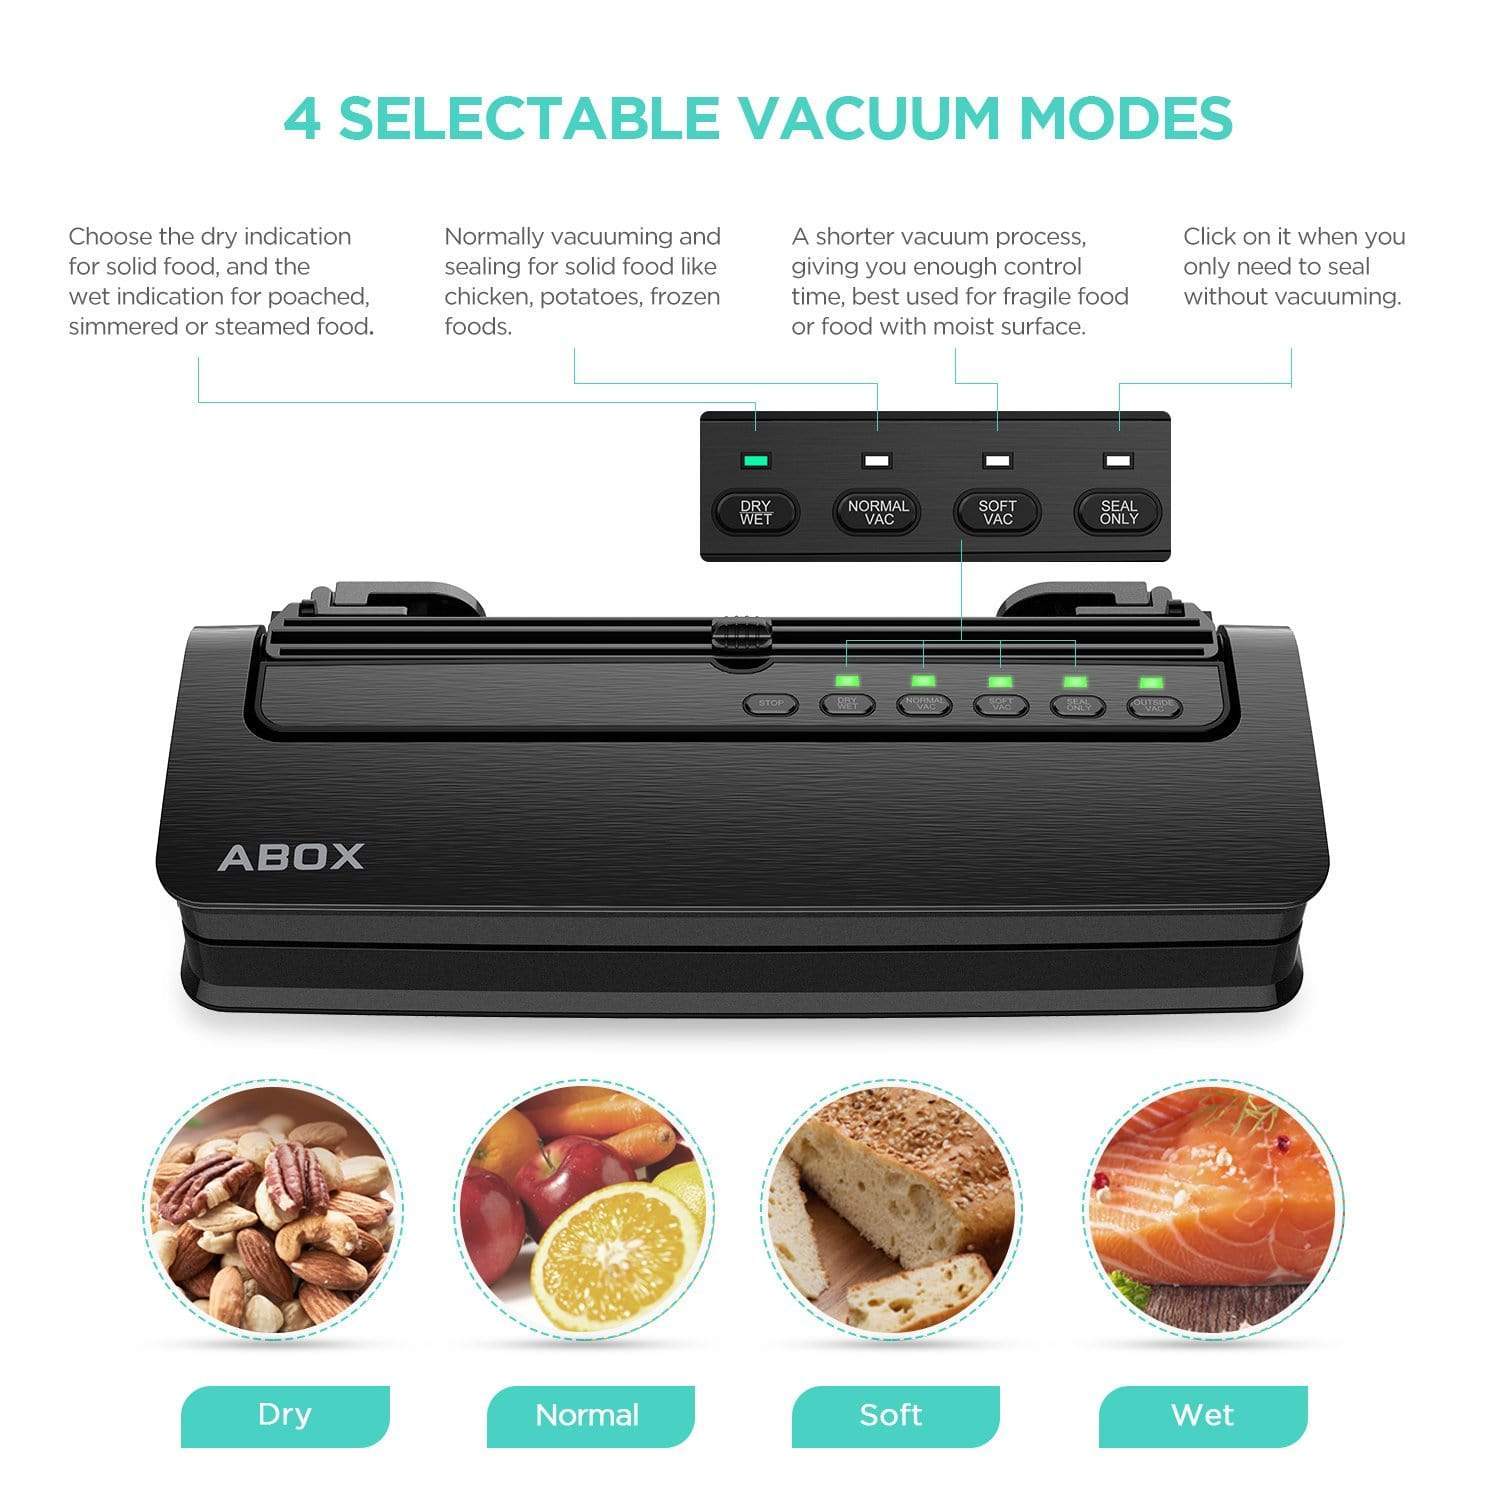 ABOX Vacuum Sealer Machine, 5 in 1 Food Vacuum Sealer, Built-in Cutter, Starter Kit Roll and Holder